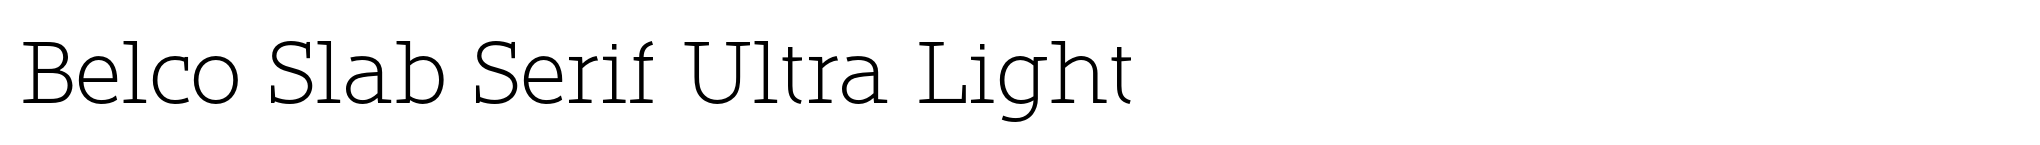 Belco Slab Serif Ultra Light image